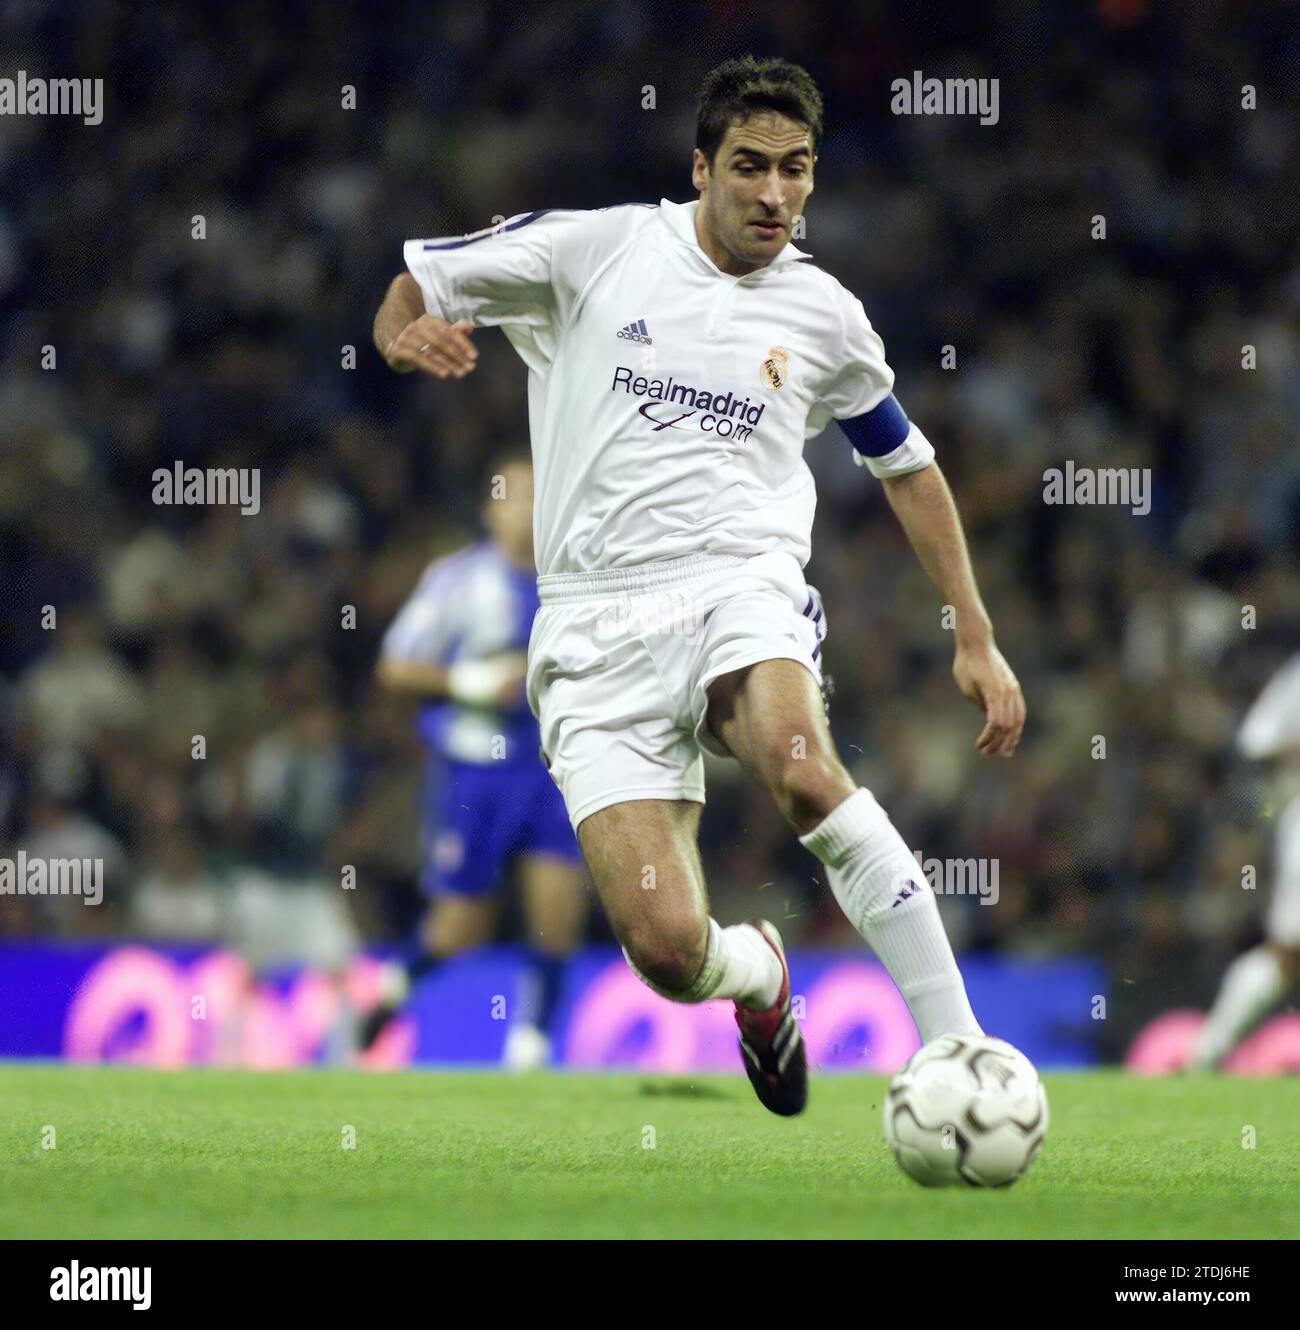 09/28/2001. Raul González Blanco. Real Madrid. Soccer player. Ignacio Gil....Archdc. Credit: Album / Archivo ABC / Ignacio Gil Stock Photo